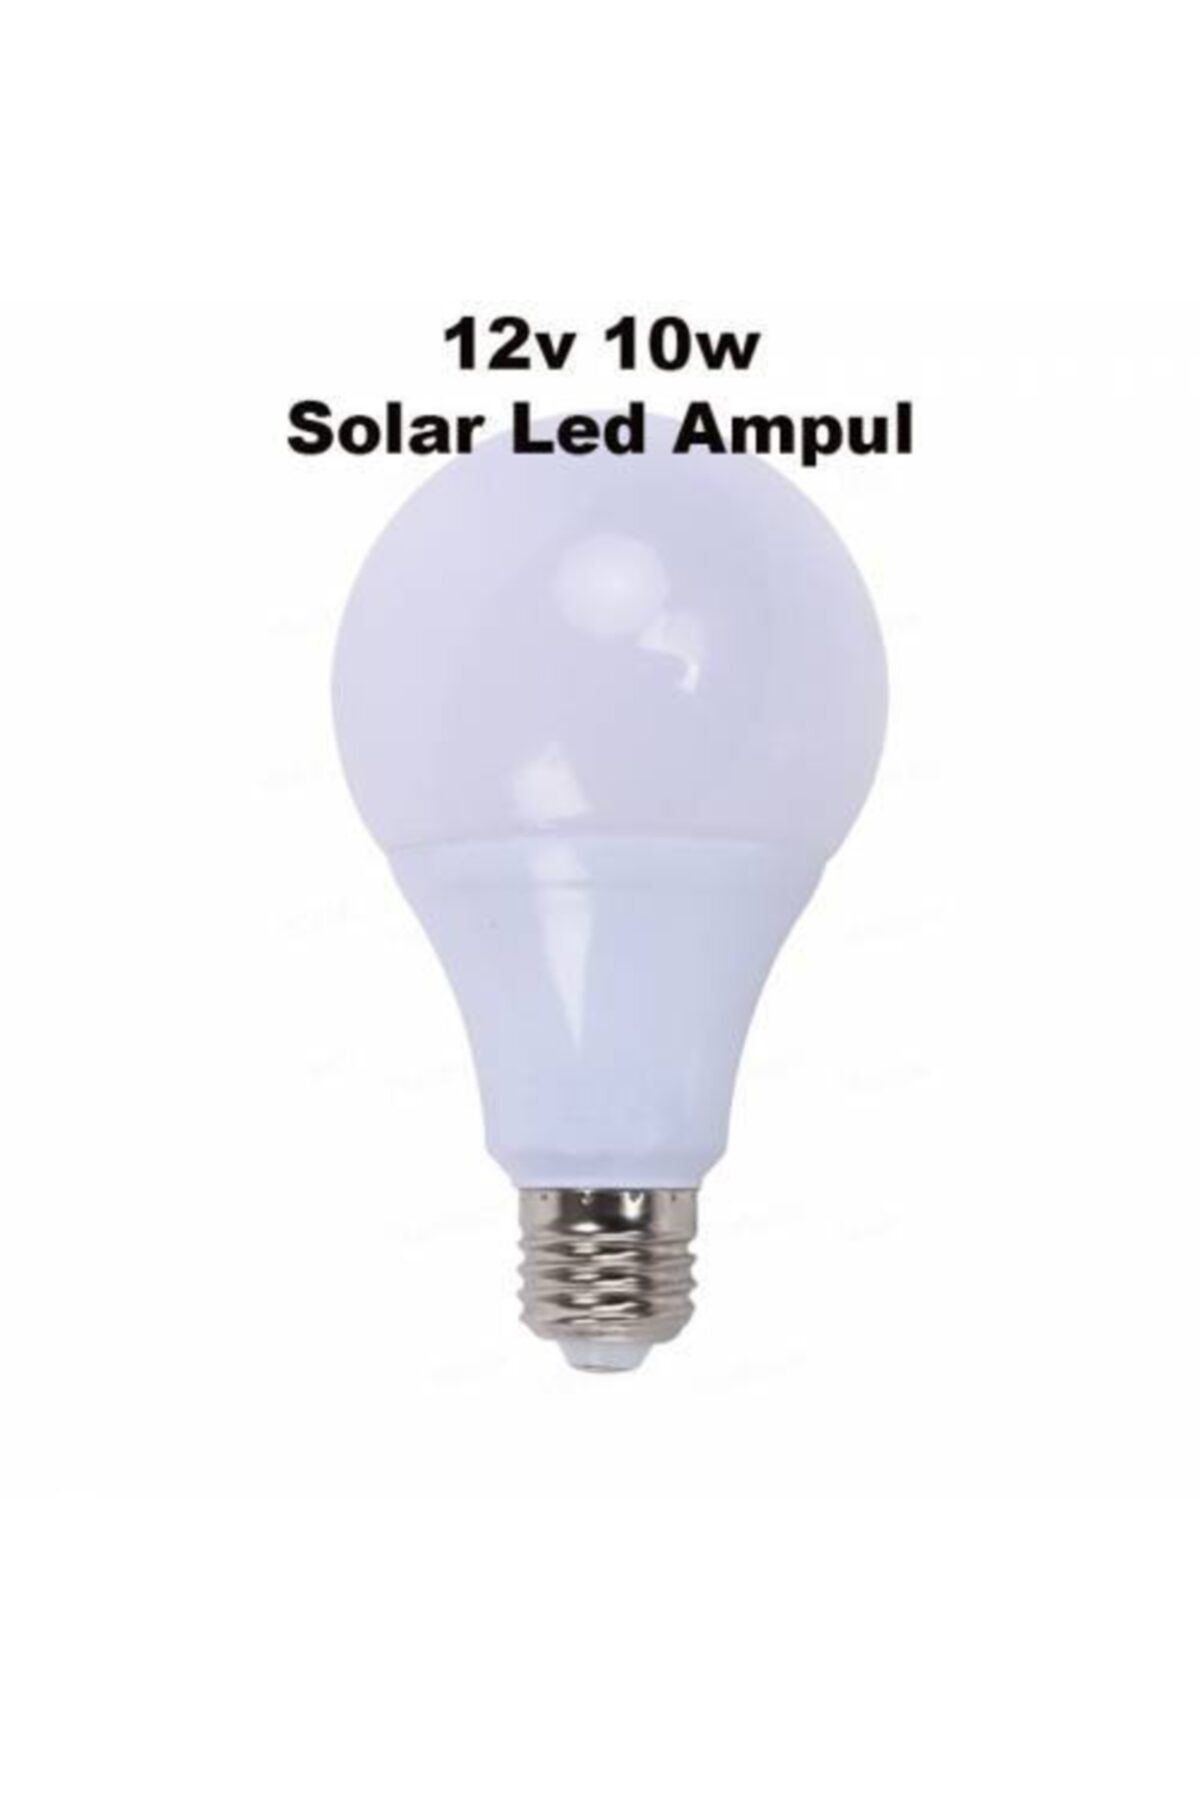 LEDX 12v 10w Led Ampül Beyaz Renk Solar Ve Akü Ile Çalışır E27 Duy